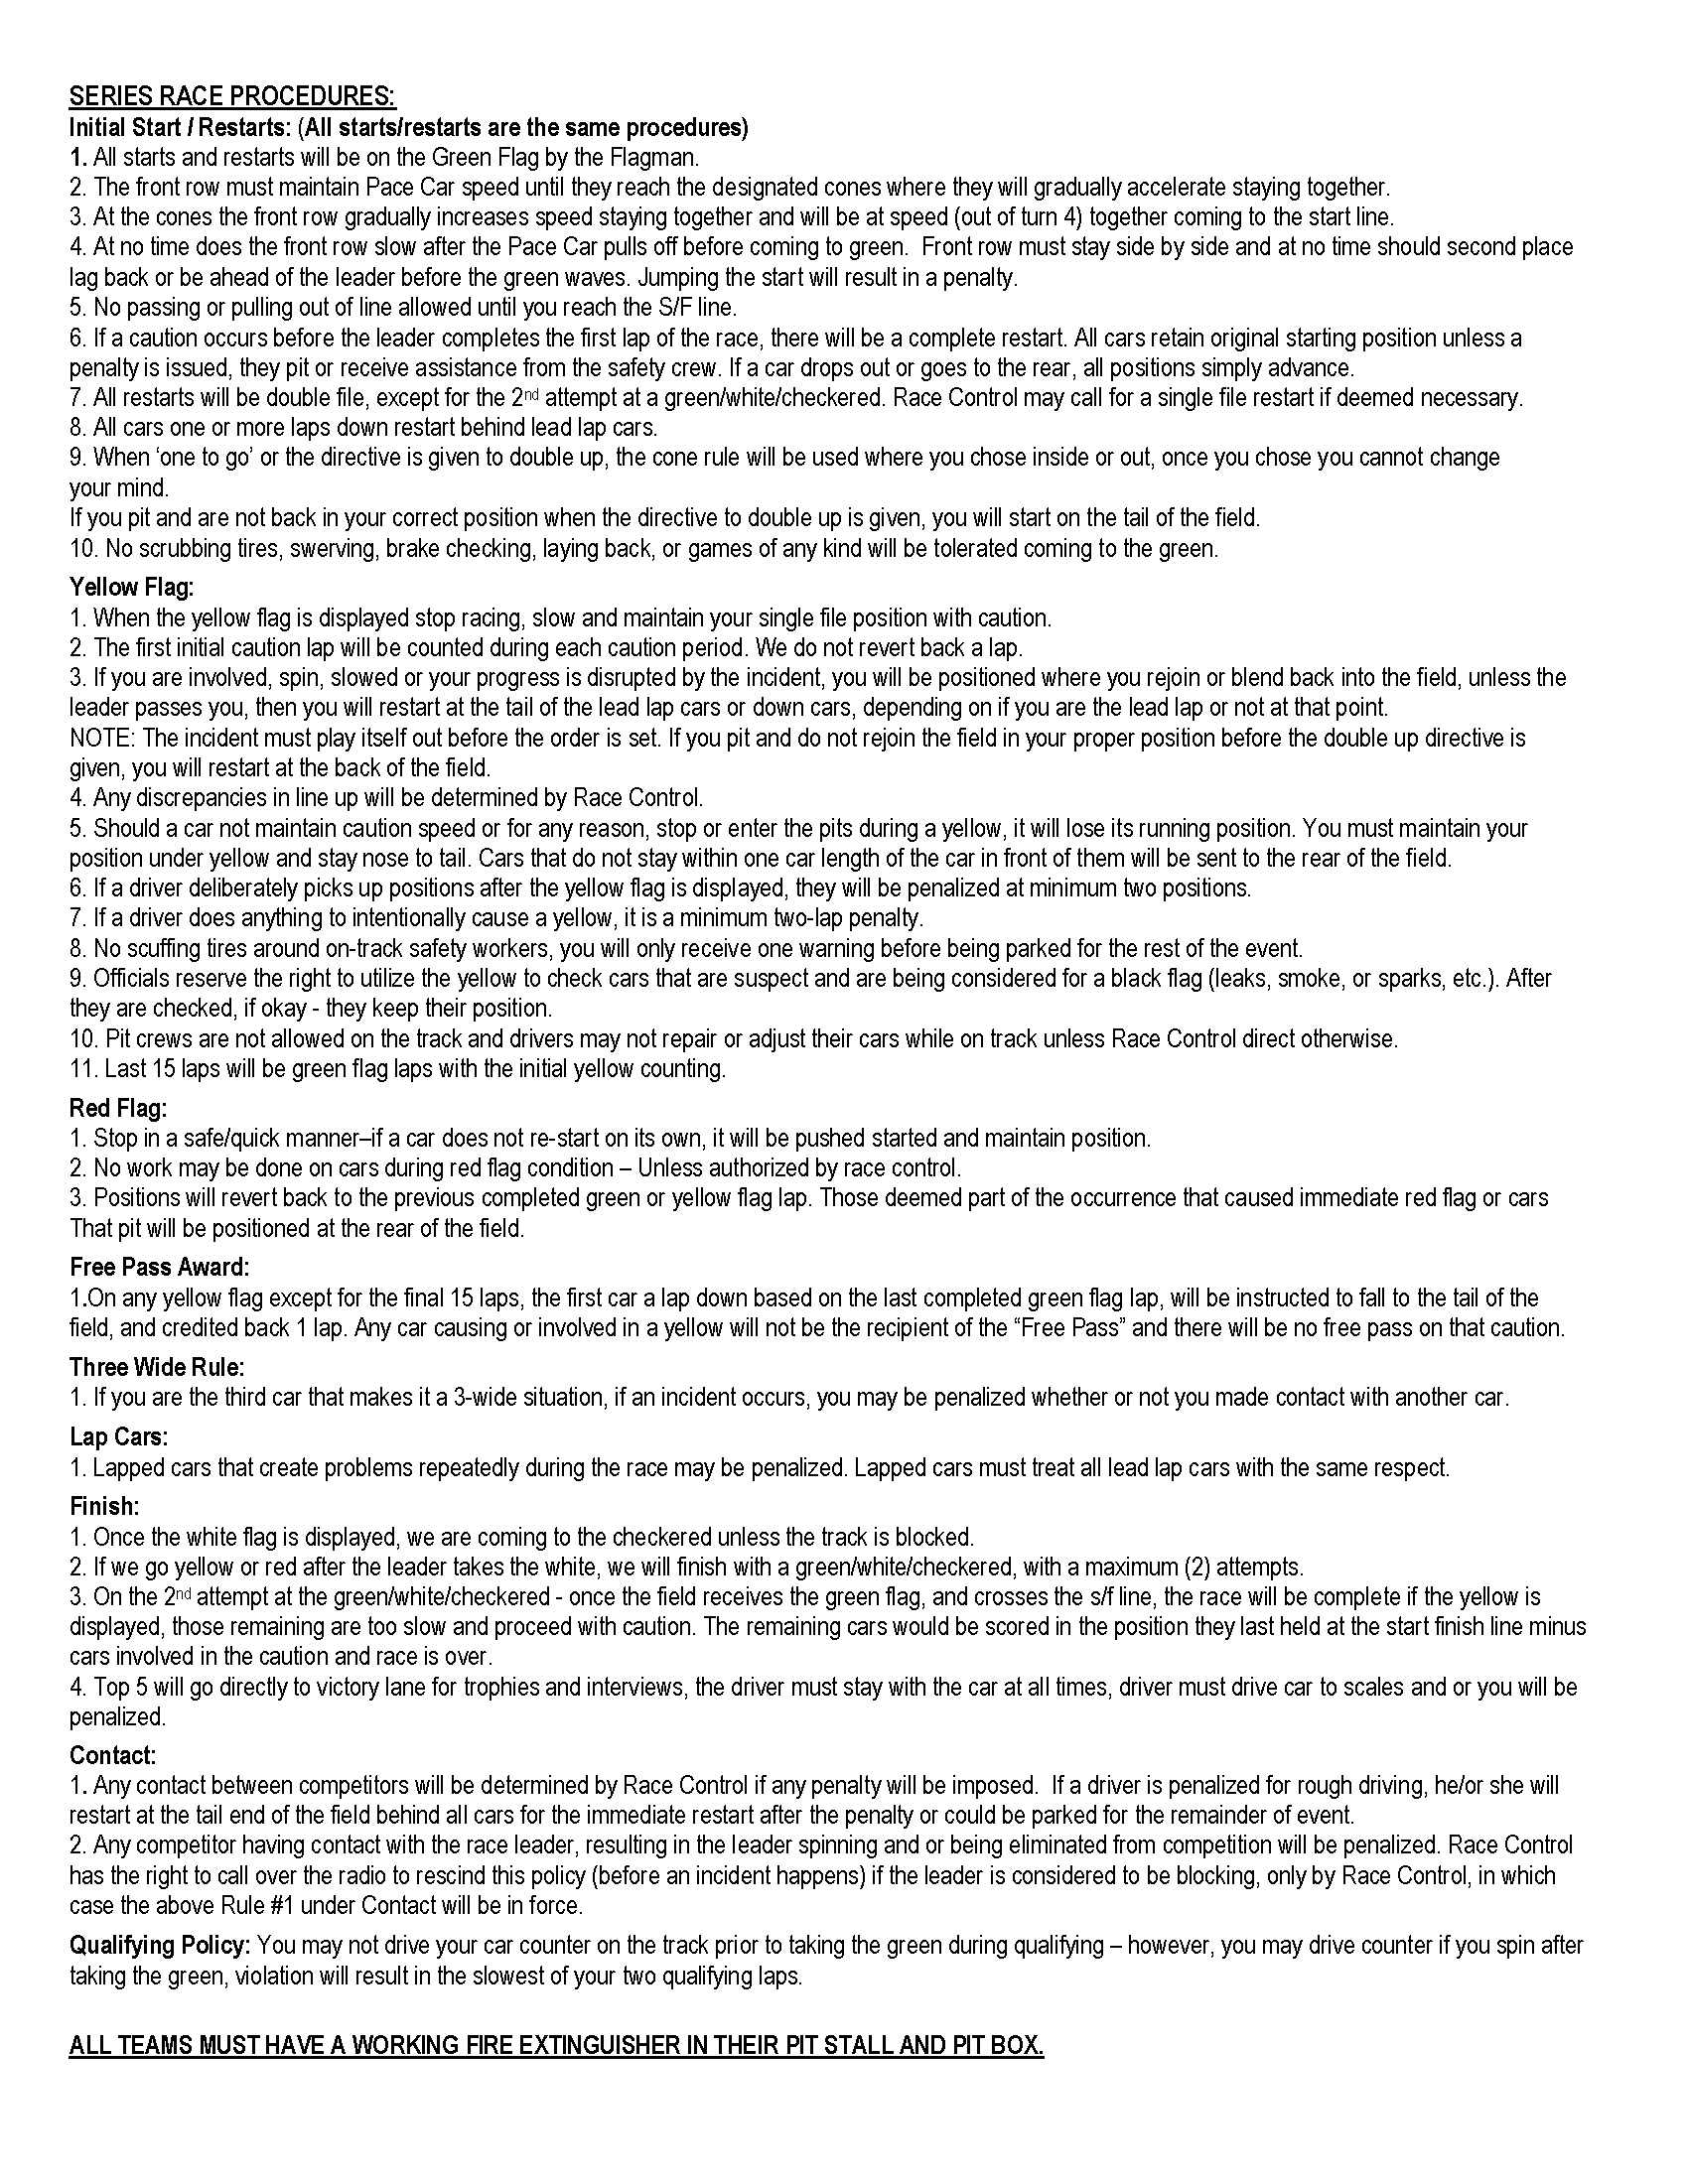 UARA Sportsman Series Rules - Page 5/6